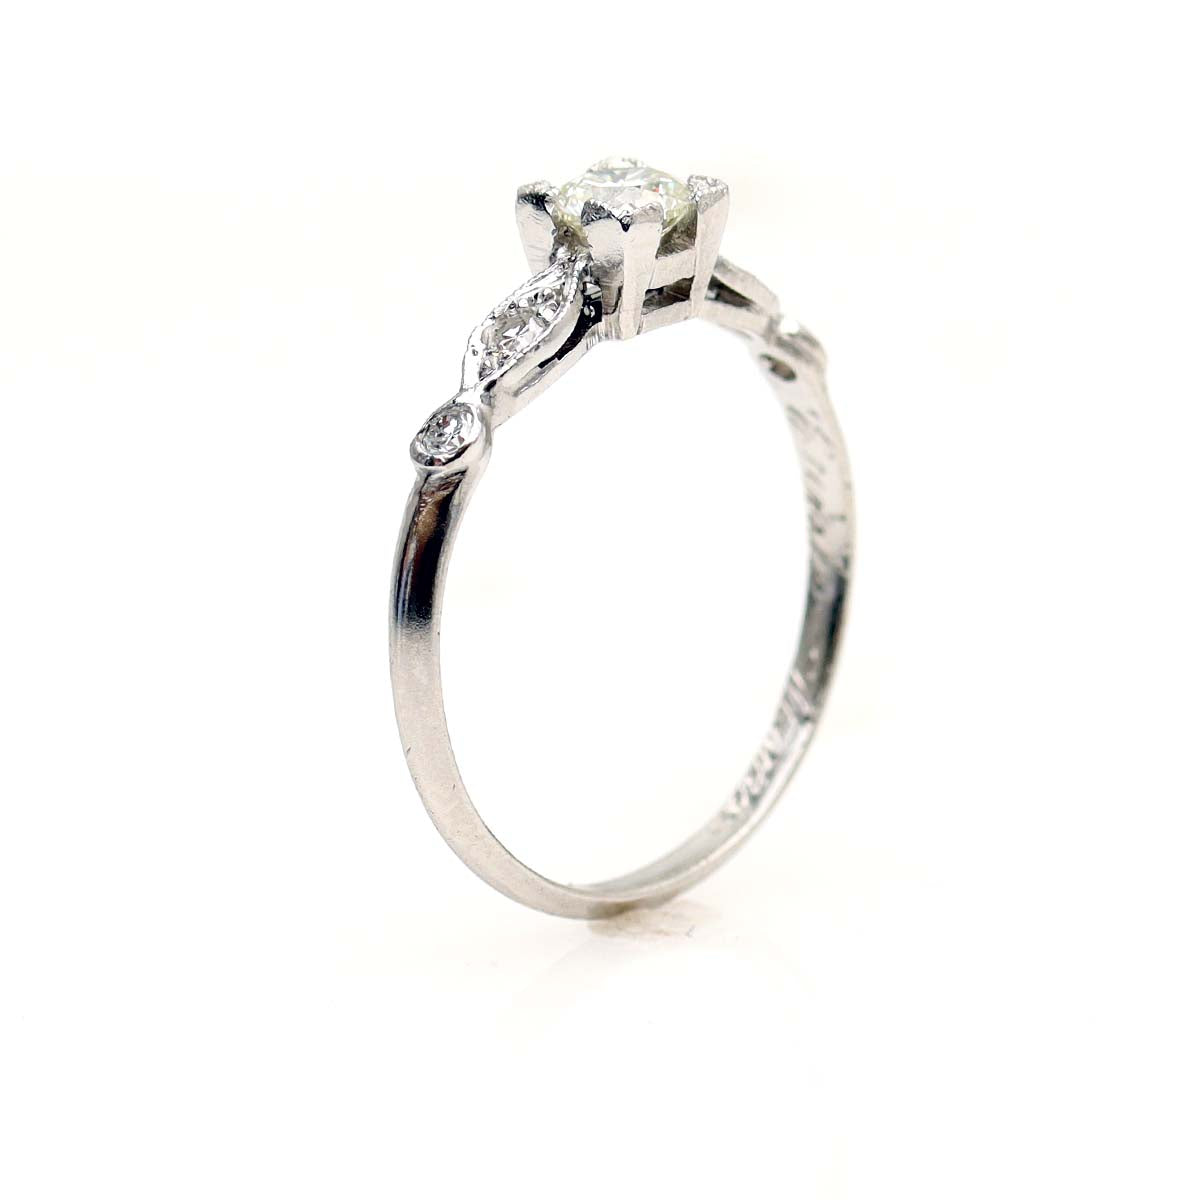 Vintage 1930s Engagement Ring #VR220714-6